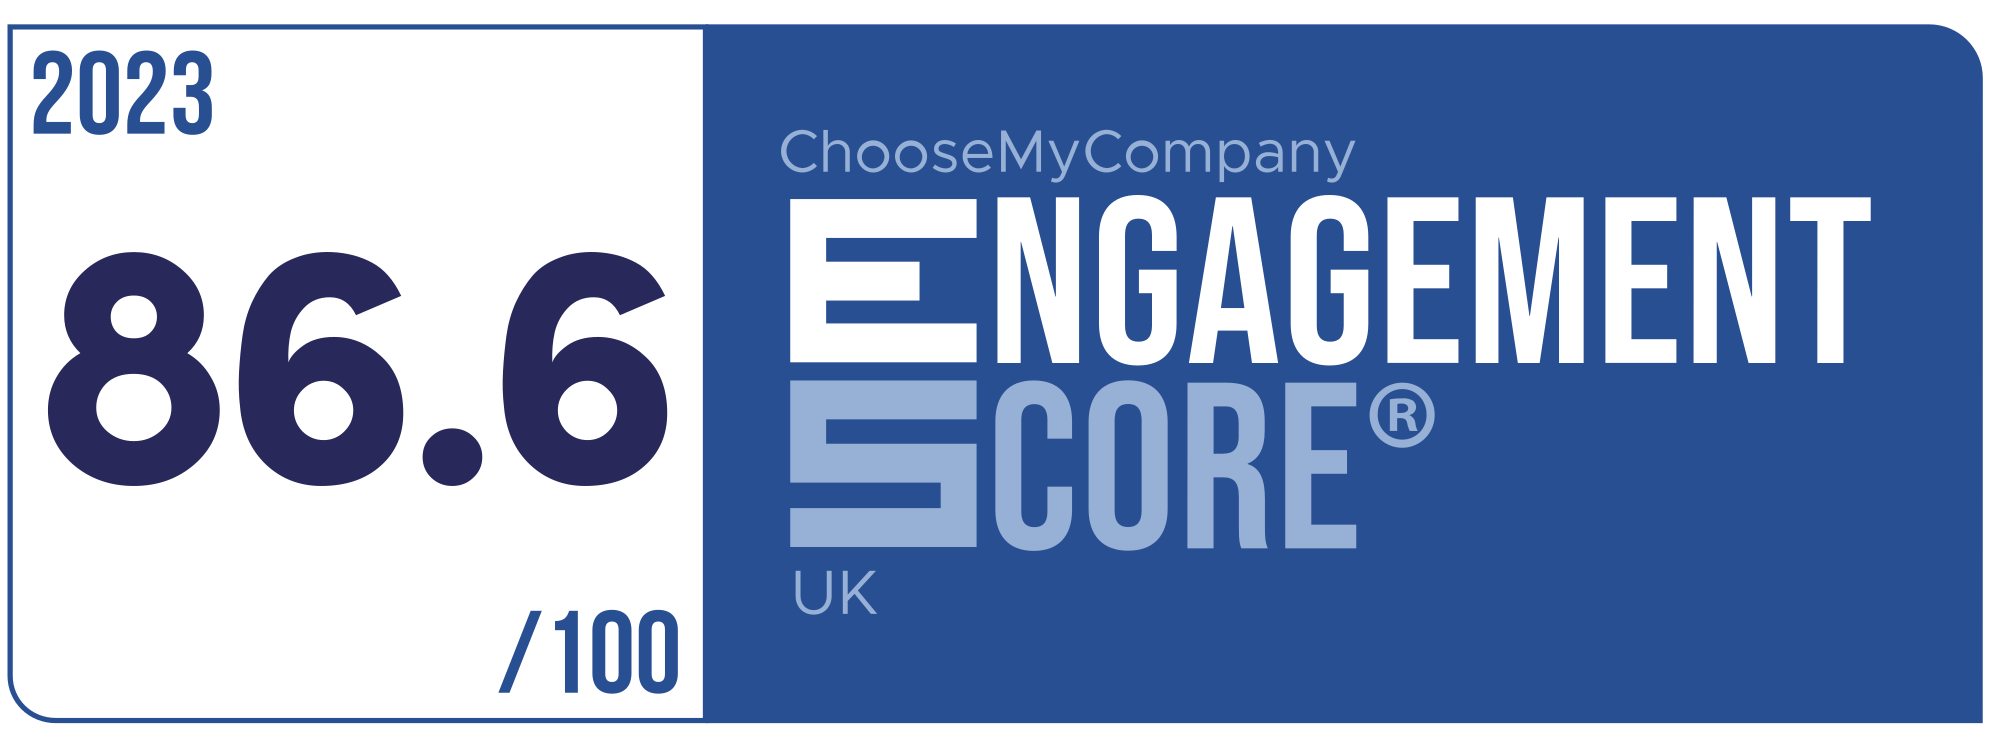 Label Engagement Score 2023 UK